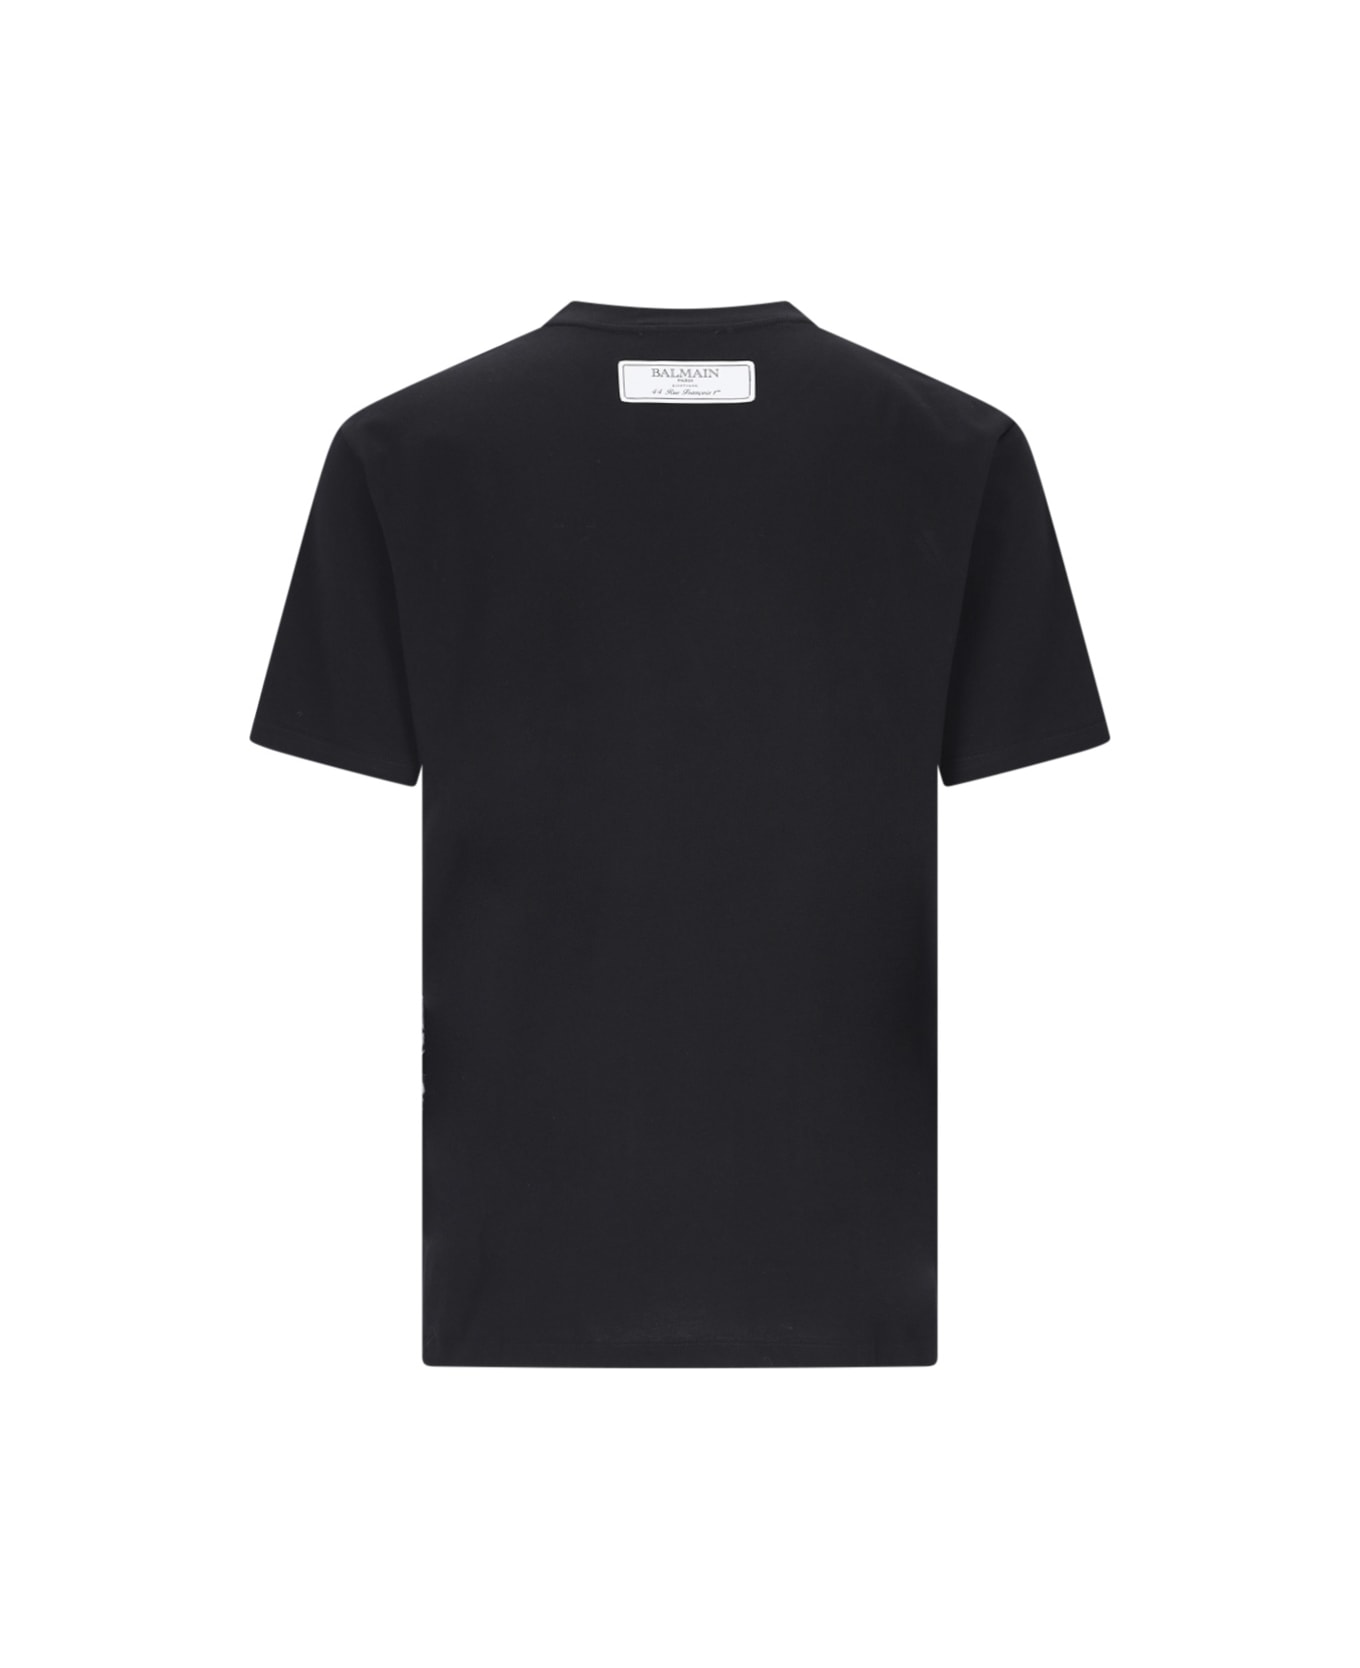 Balmain Printed T-shirt - Noir/multi gris シャツ